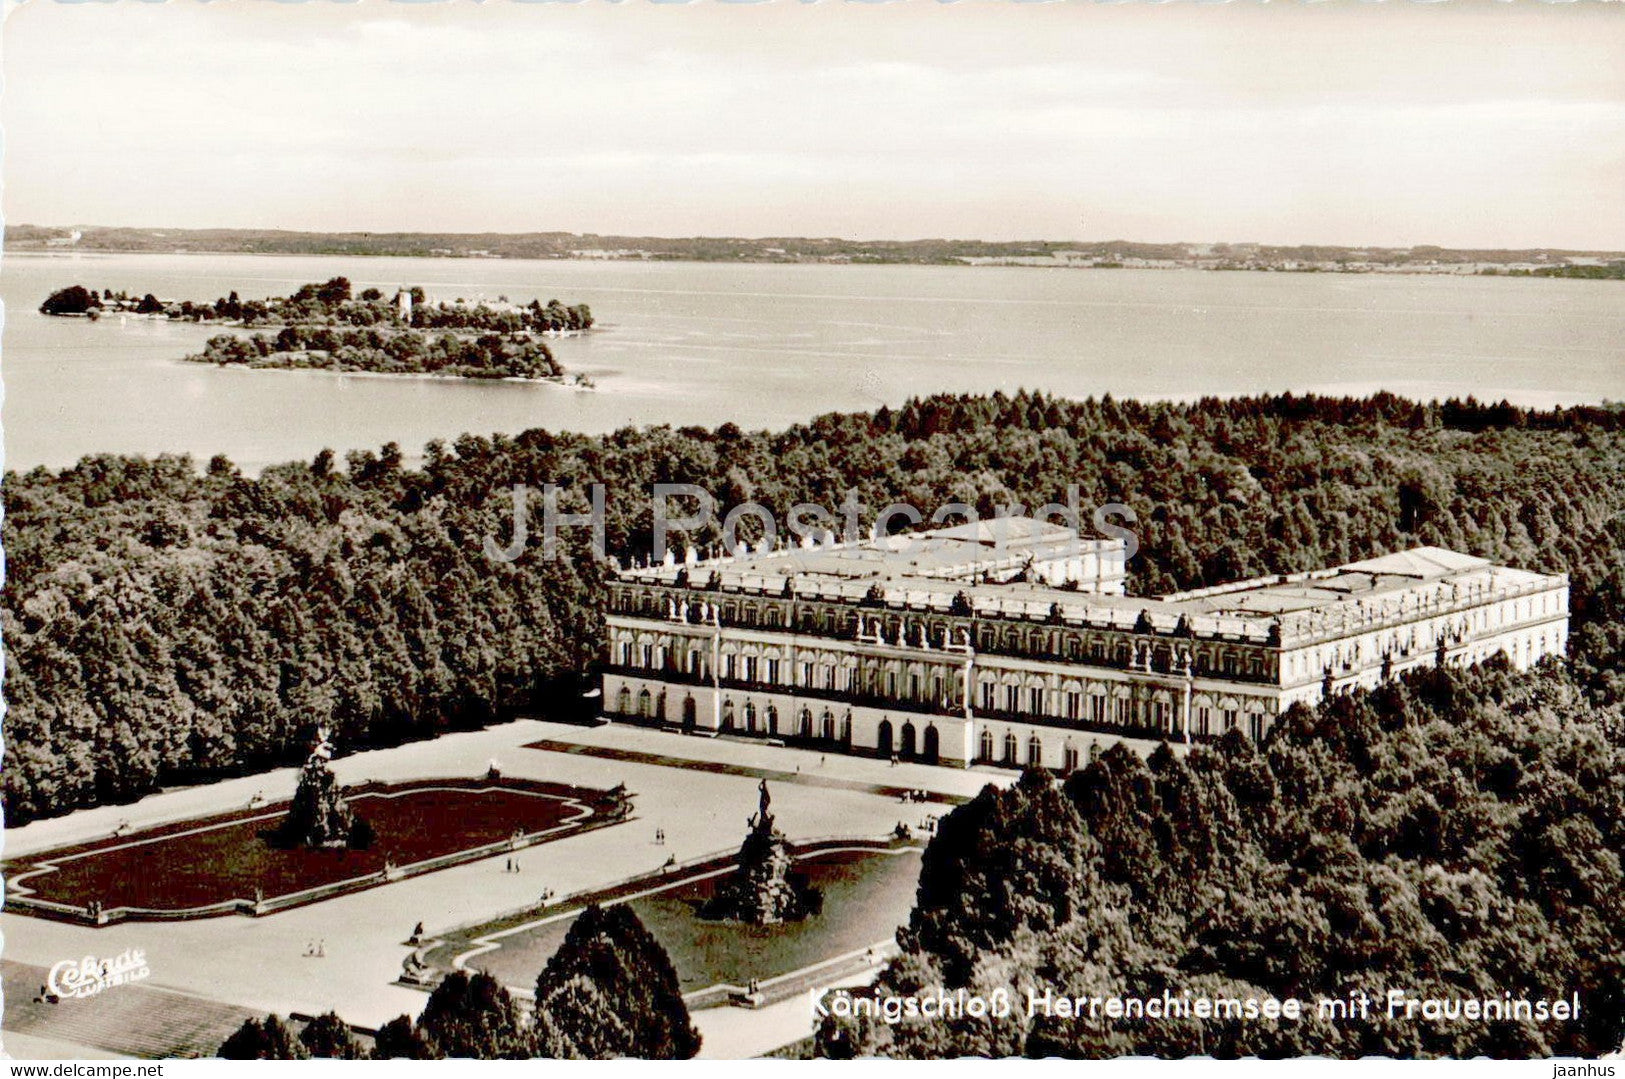 Konigschloss Herrenchiemsee mit Fraueninsel - castle - old postcard - Germany - unused - JH Postcards